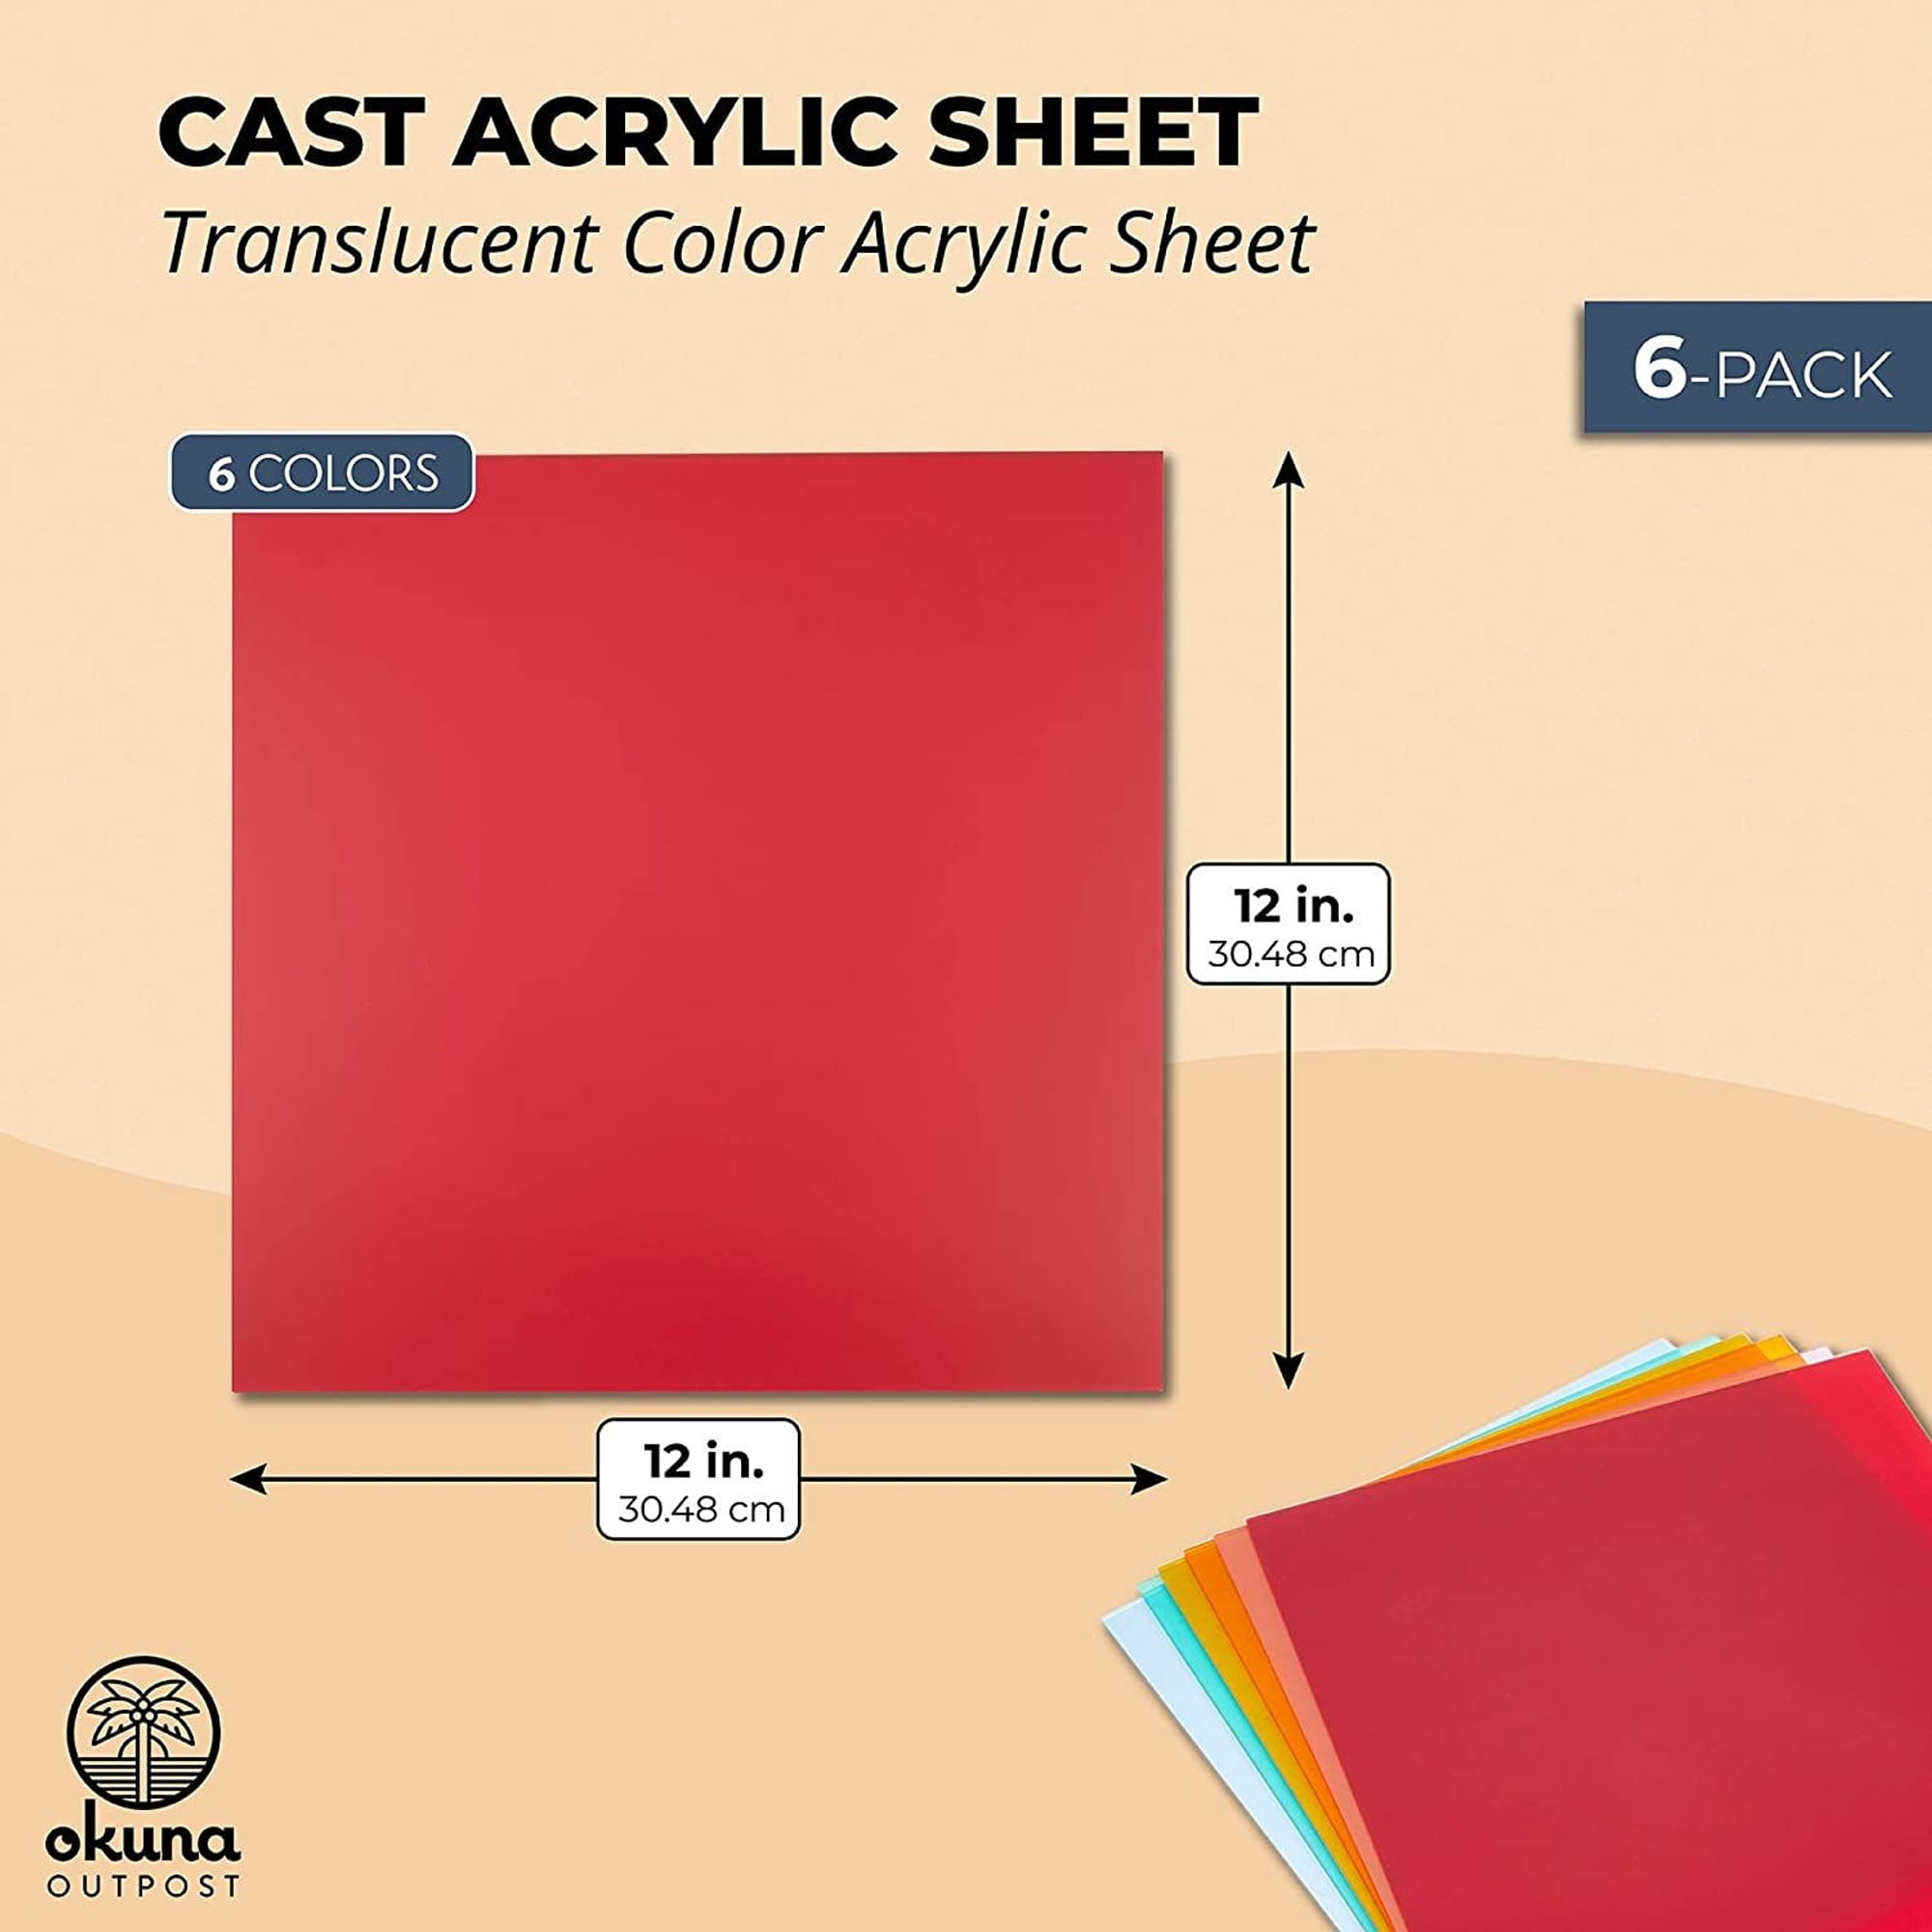 Lesnlok 6 Pack 8 x 12 Colored Cast Acrylic Sheet,18 Translucent Plexiglass Sheet,colored Plastic Sheet